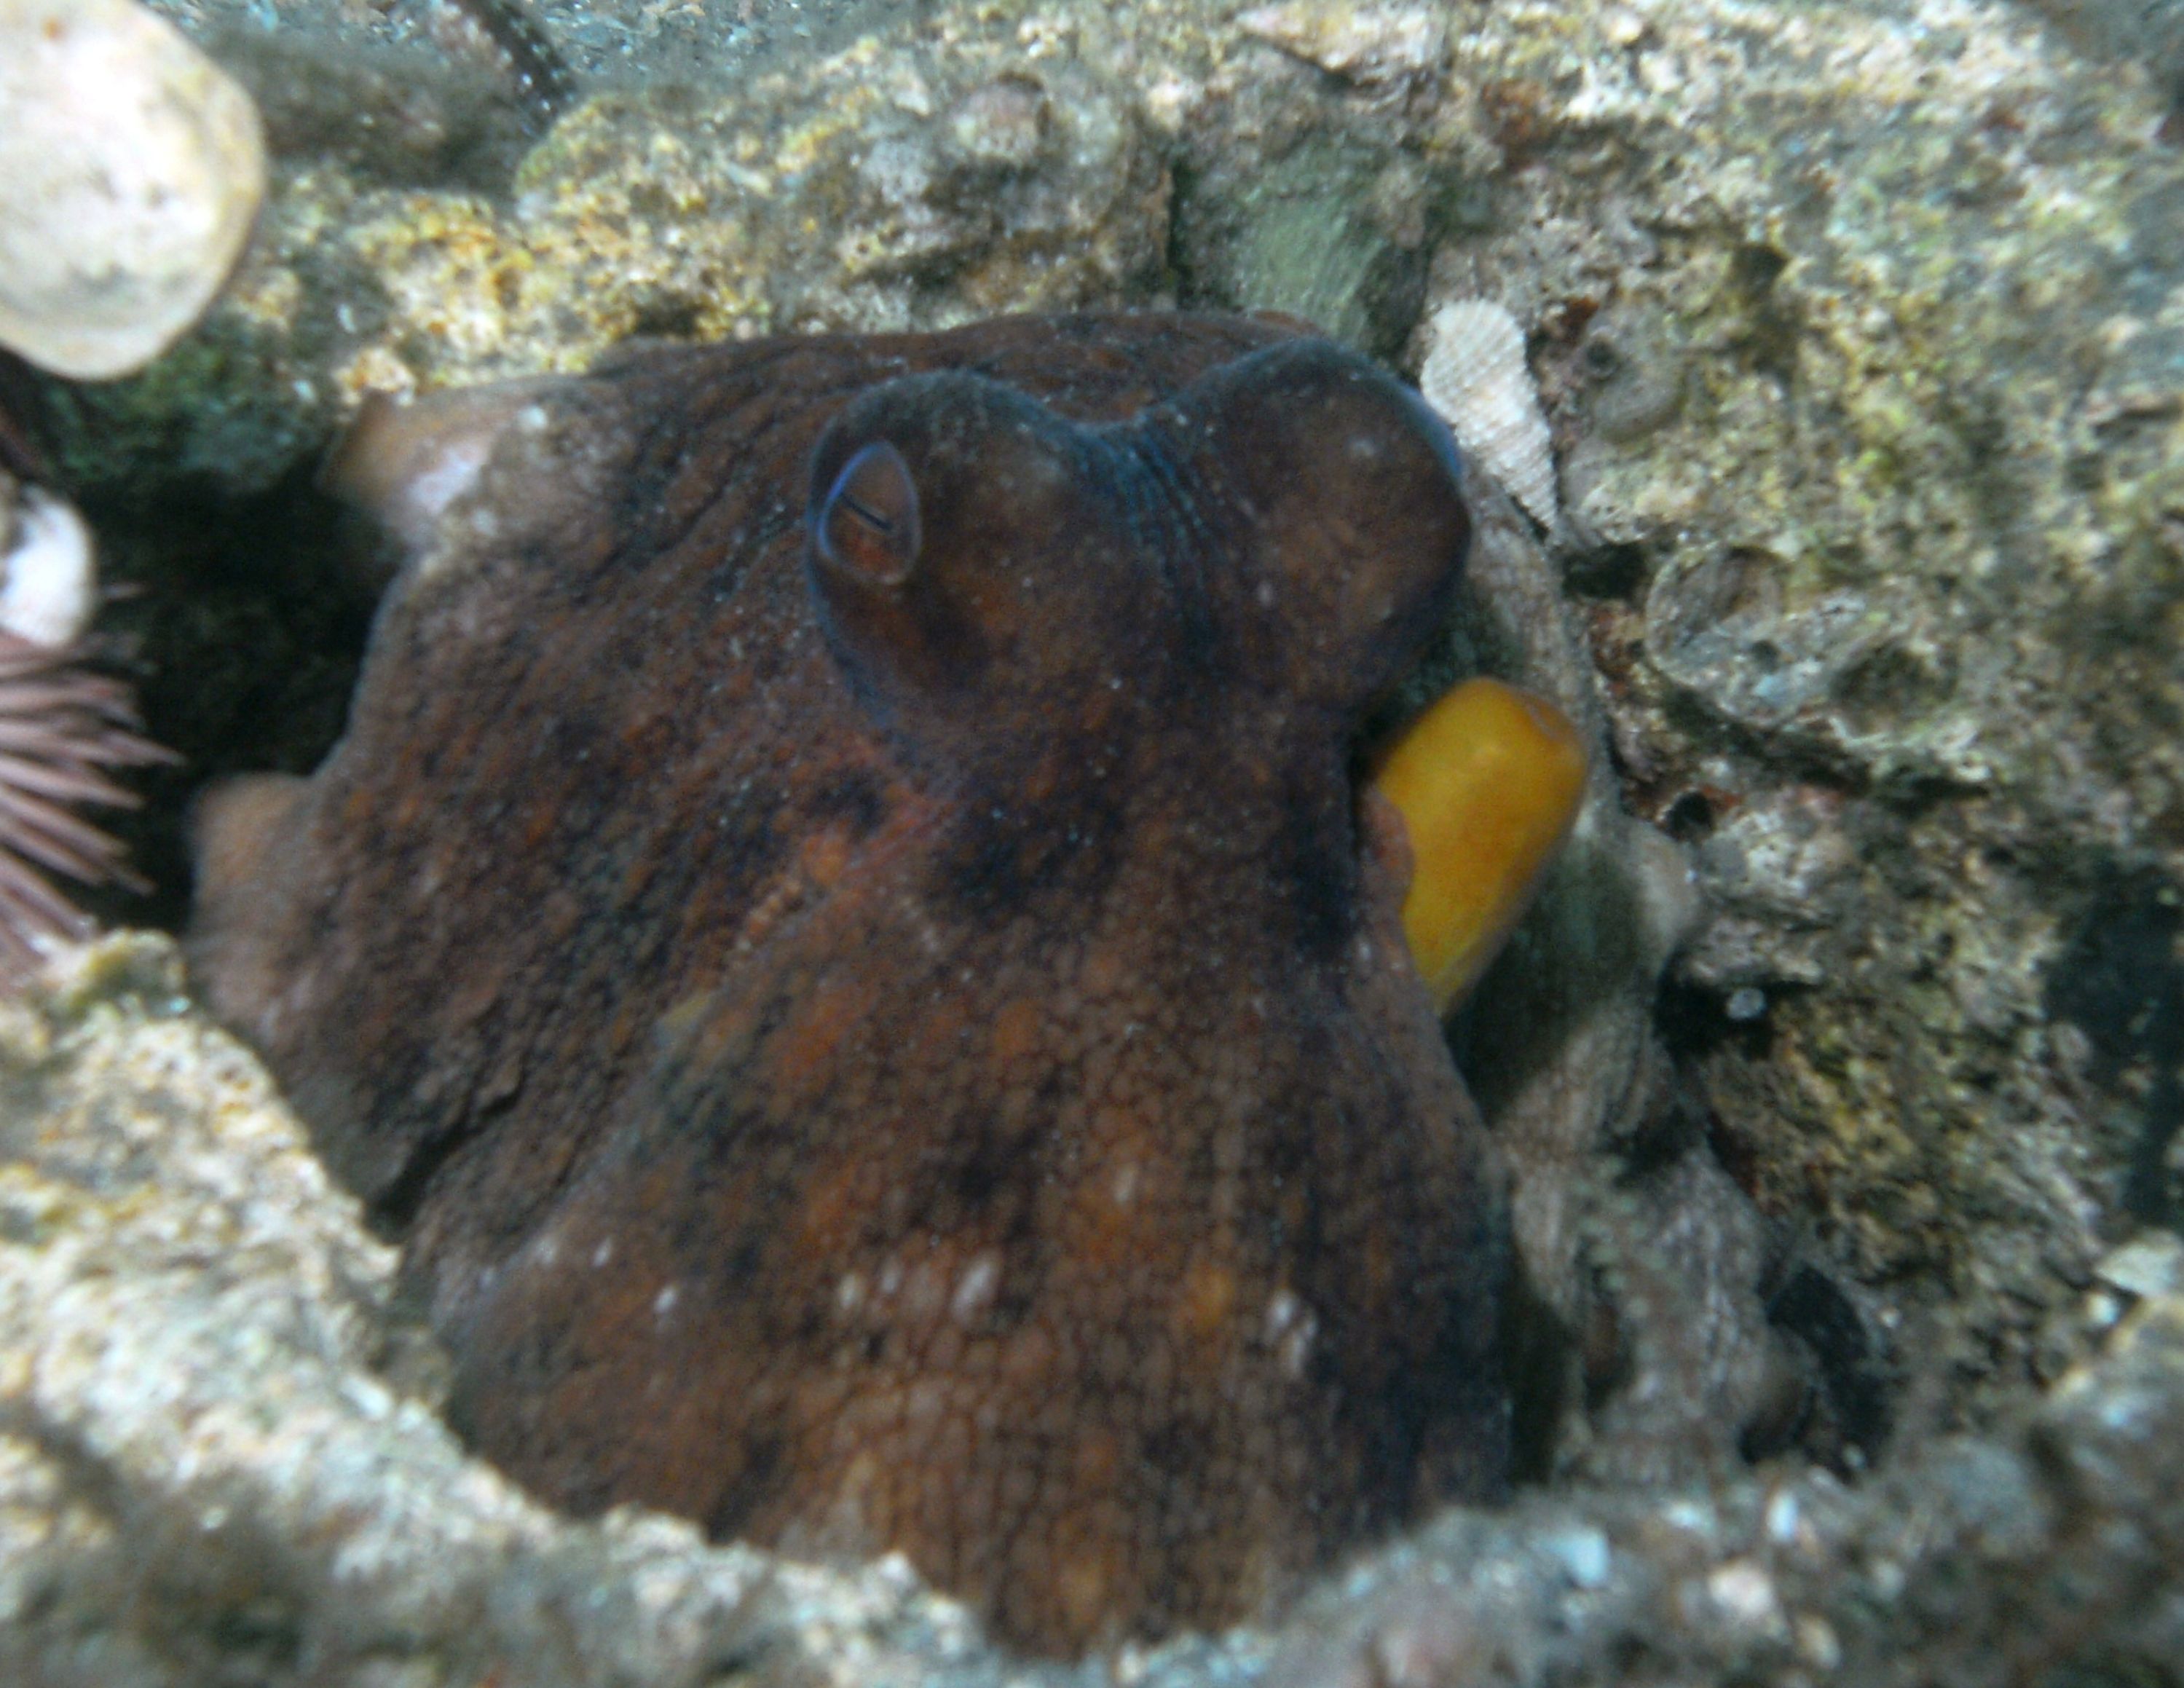 common octopus